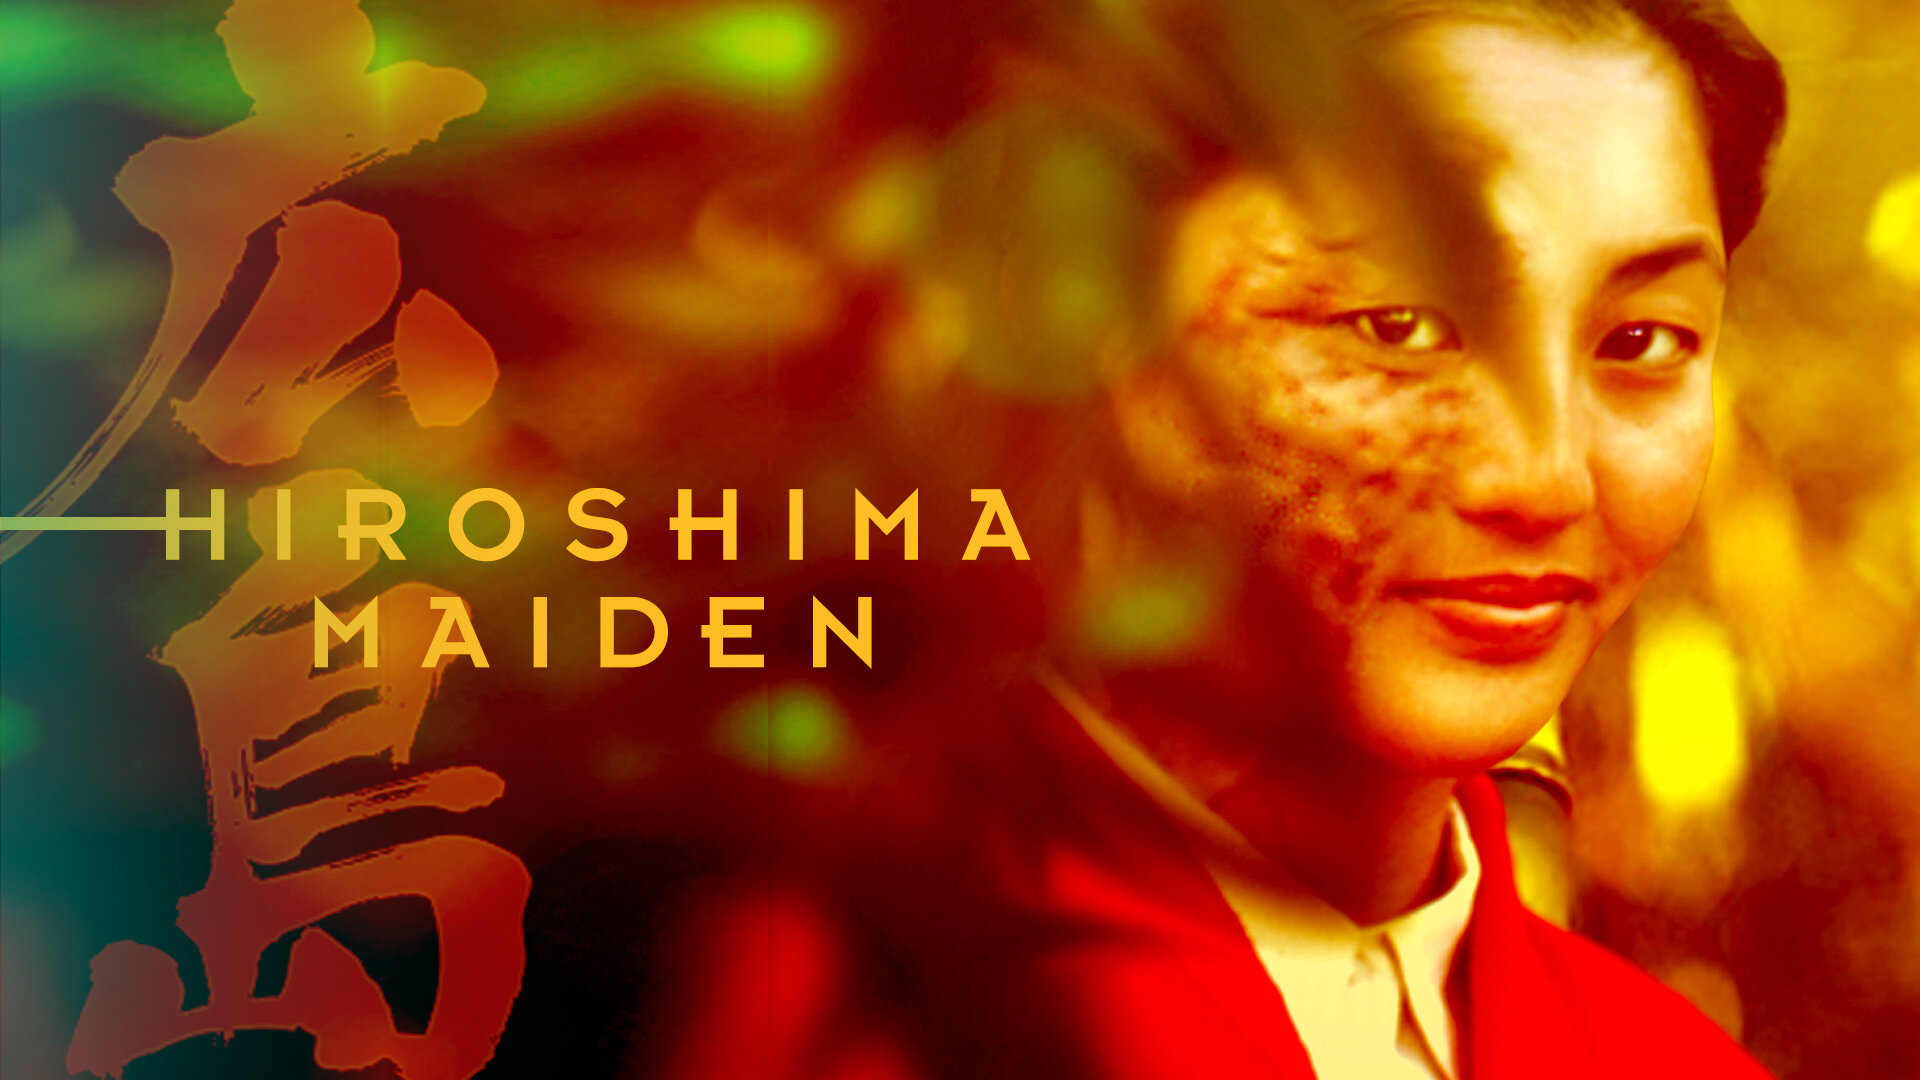 5112 - Hiroshima Maiden_1920x1080.jpg